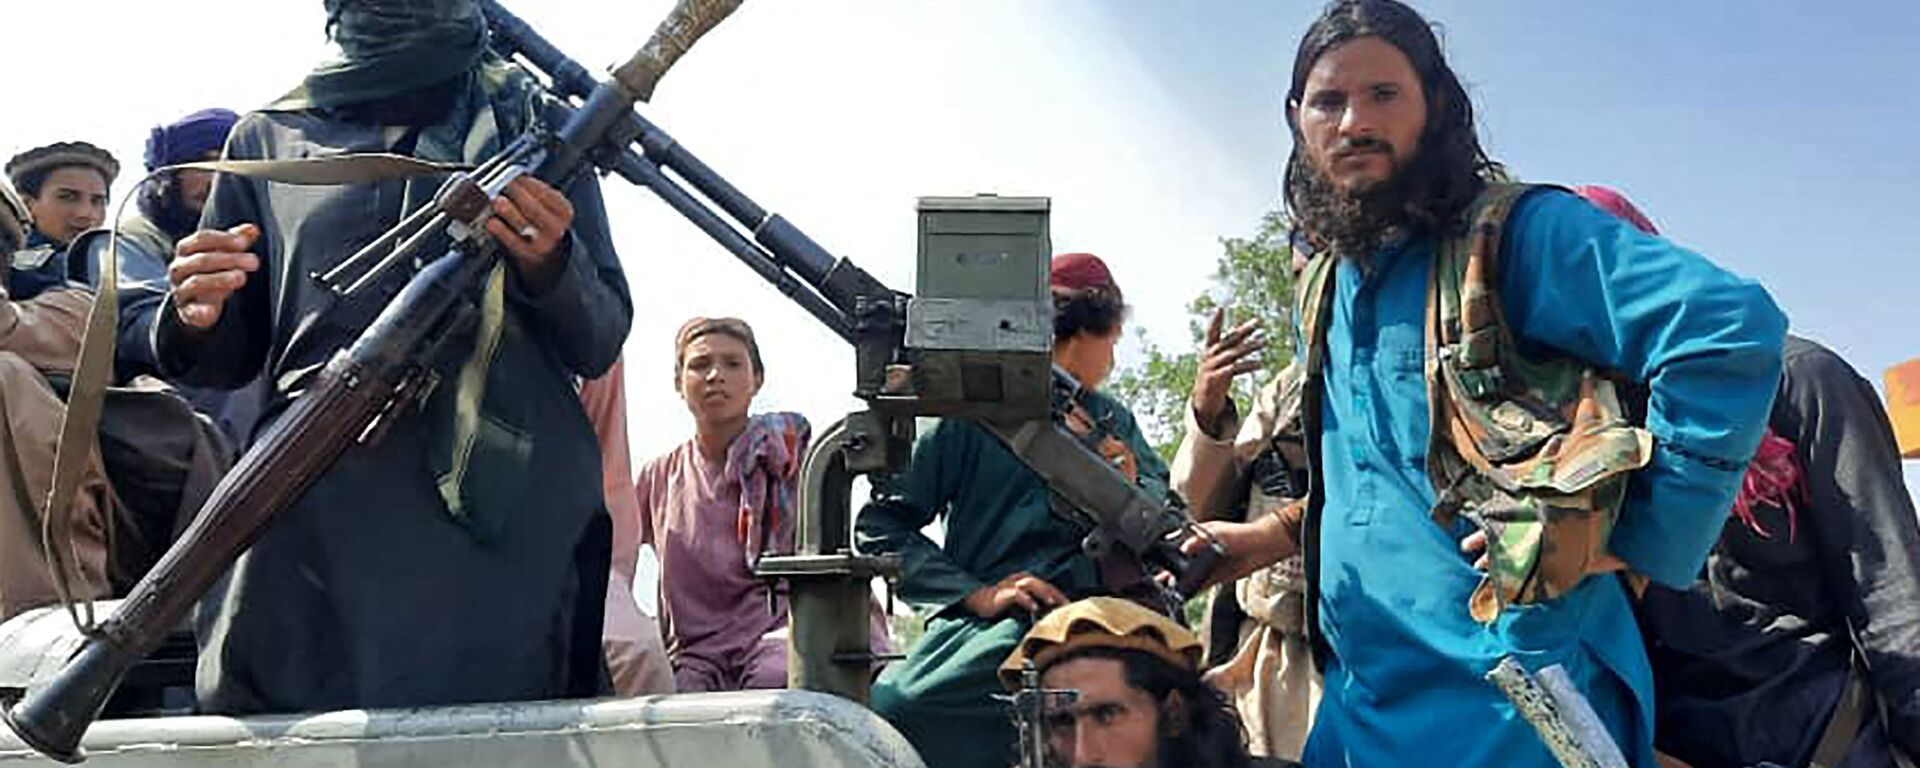 Militanti Talibana* u provinciji Lagman, Avganistan - Sputnik Srbija, 1920, 02.09.2021